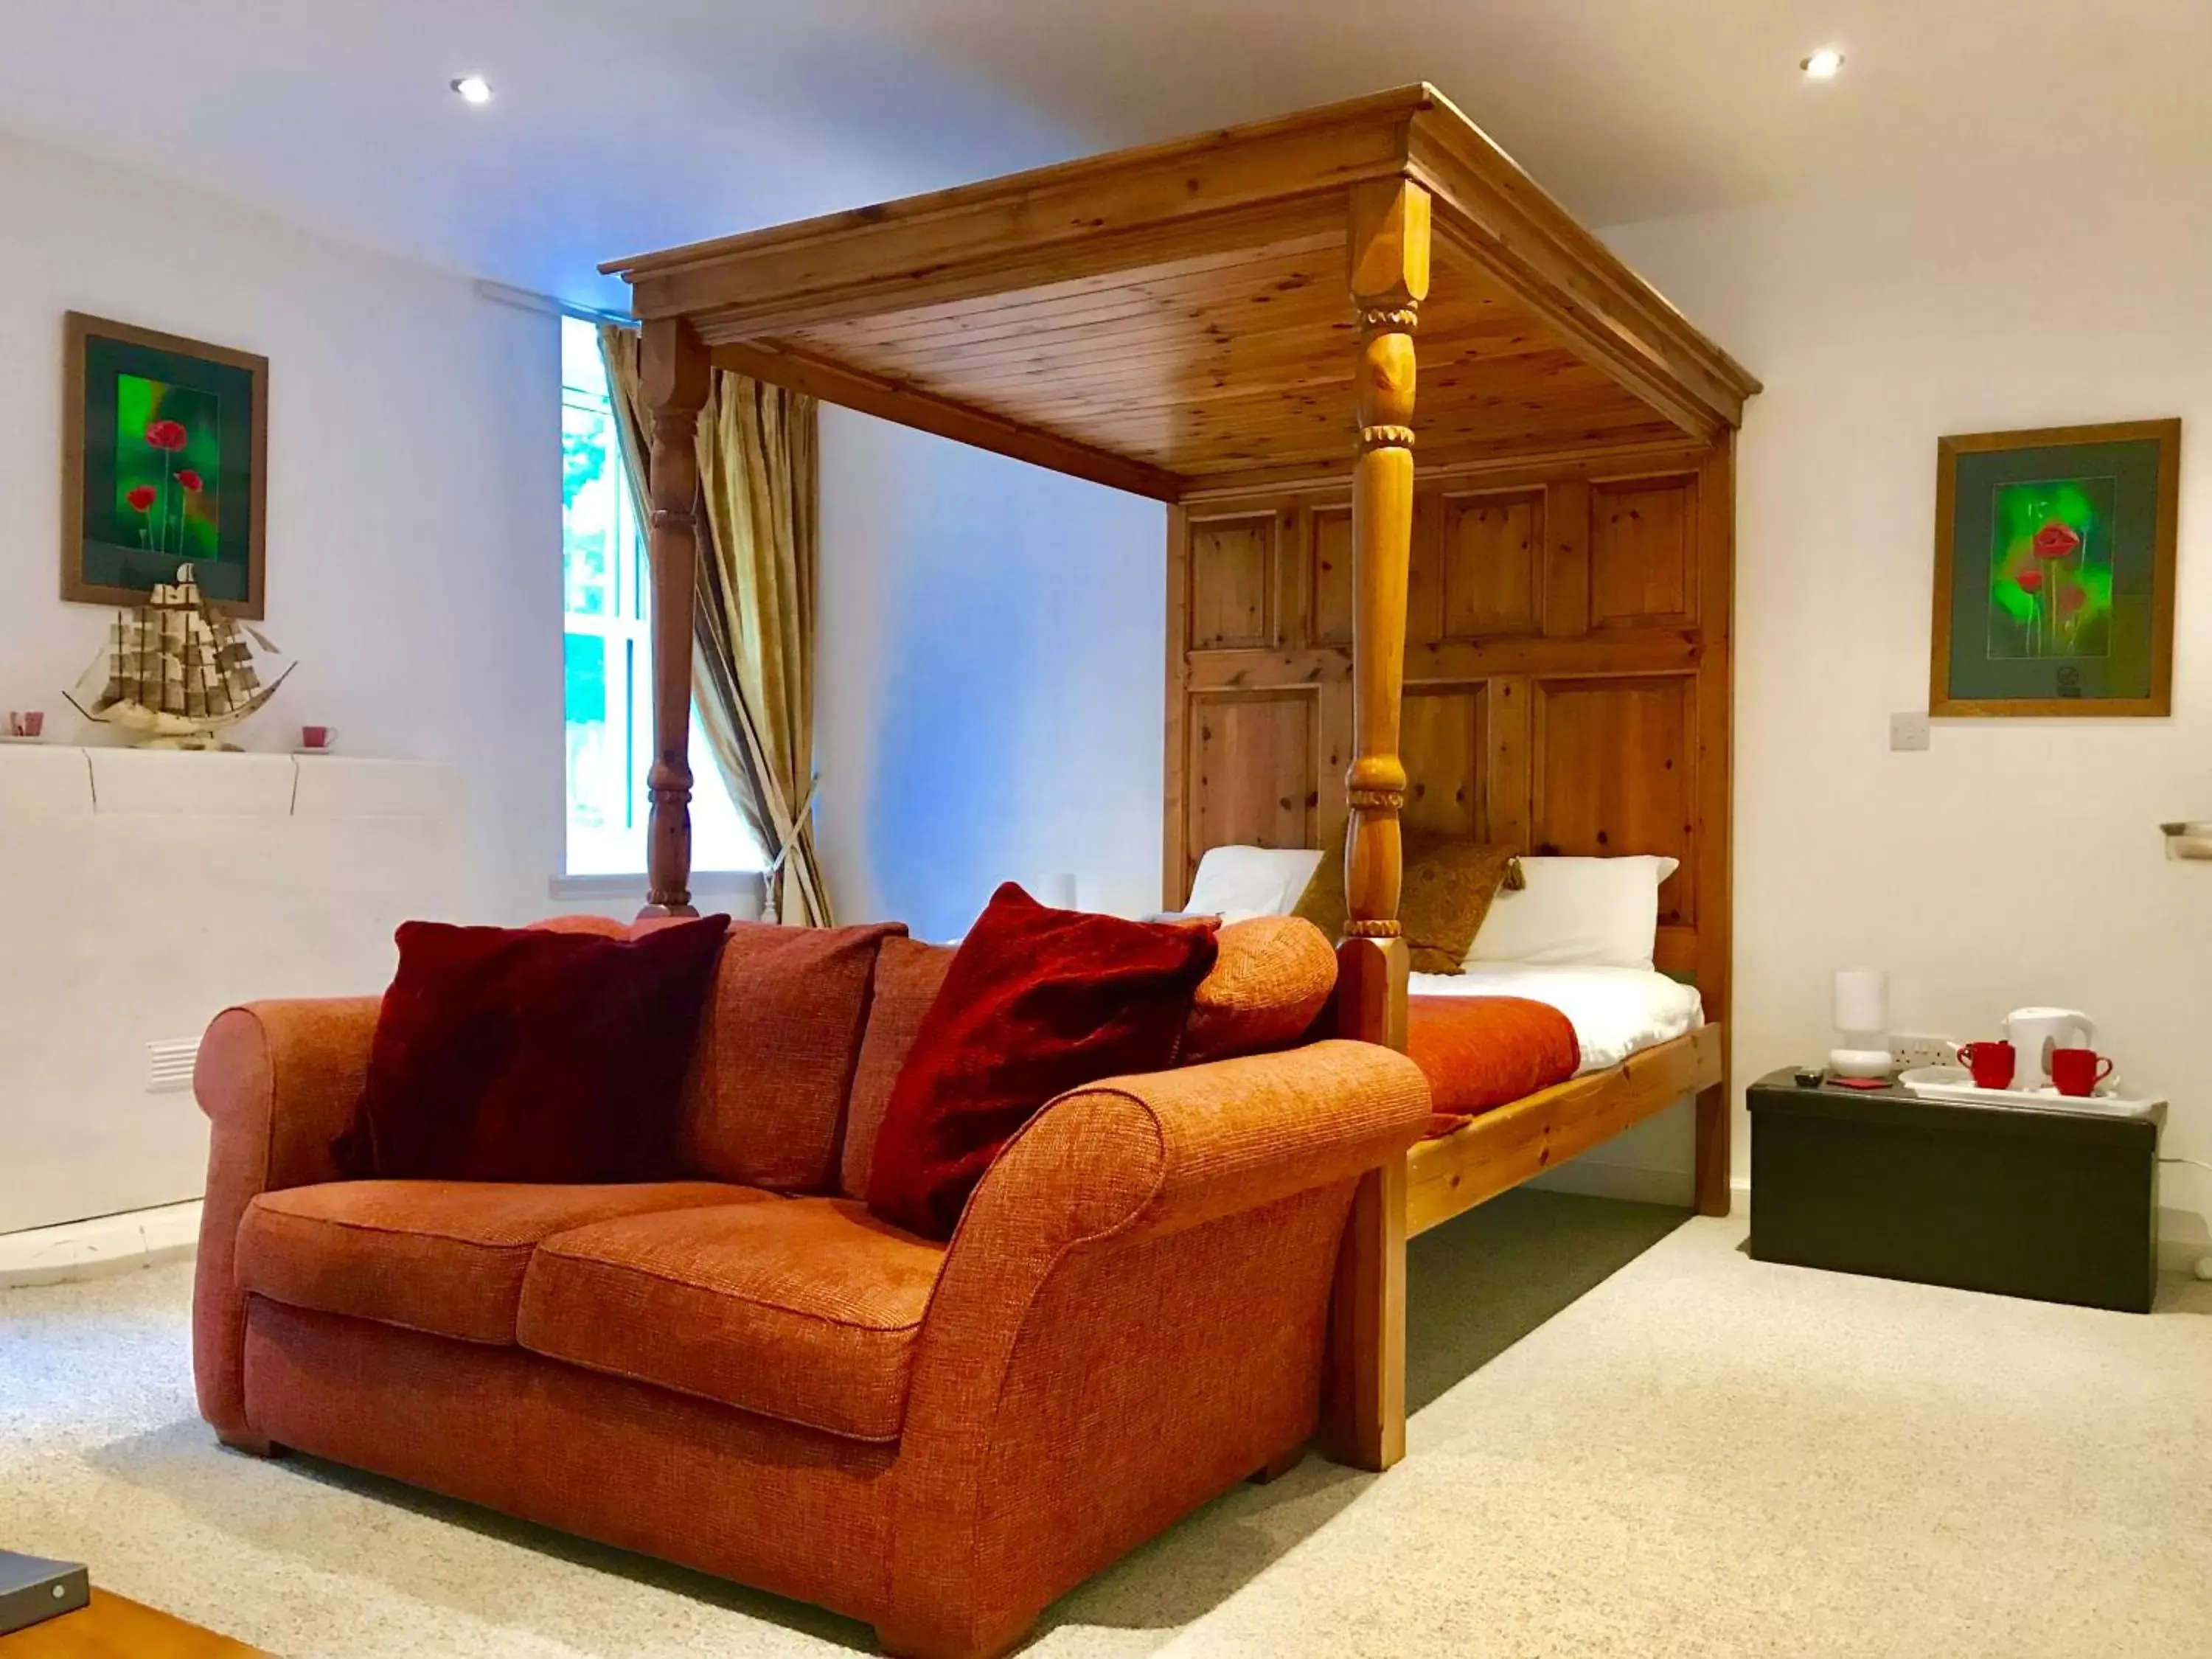 Bedroom, Seating Area in Drumdevan Country House, Inverness